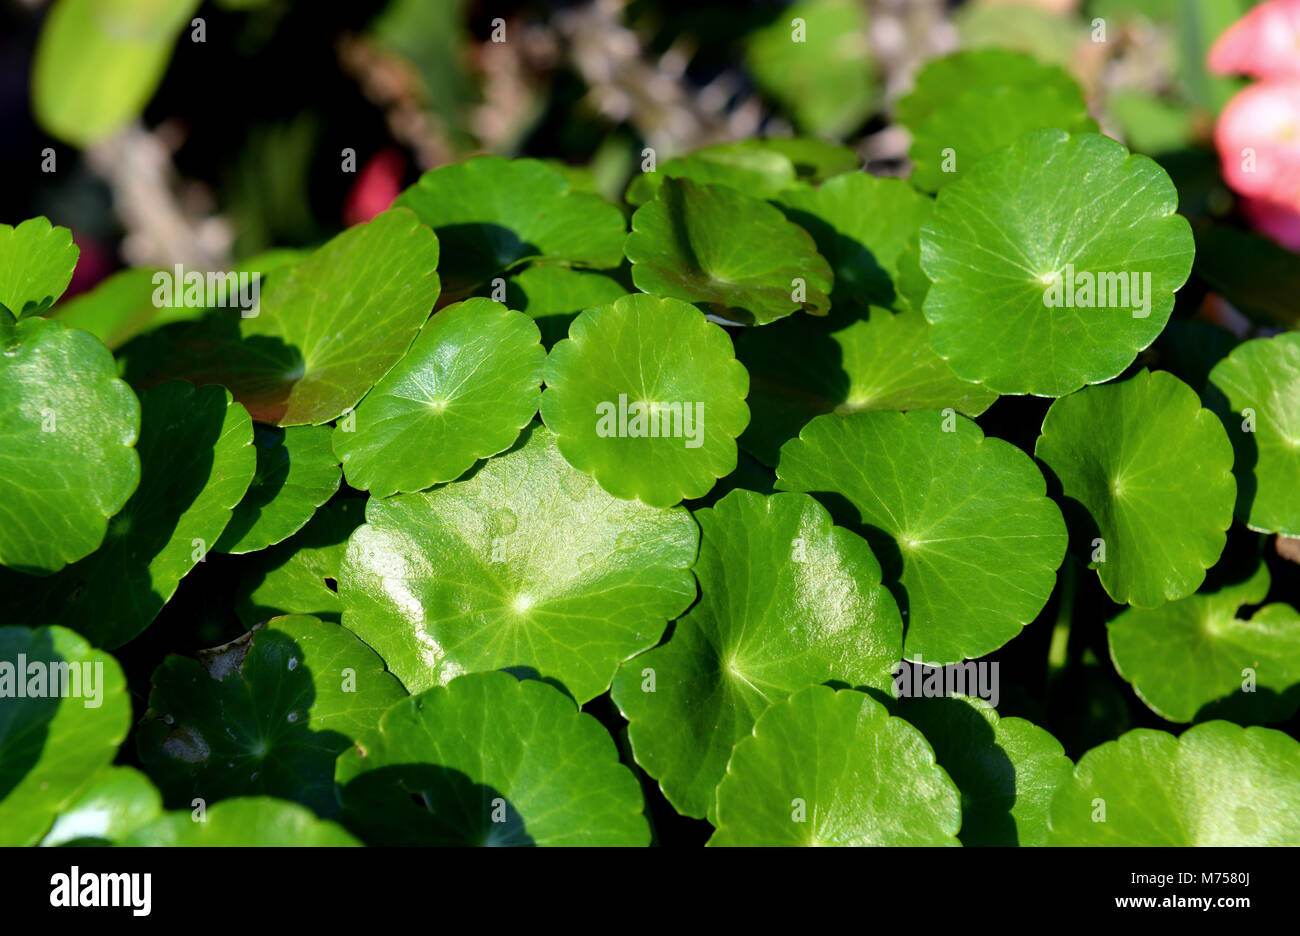 natural fresh aquatic plant of home garden Stock Photo